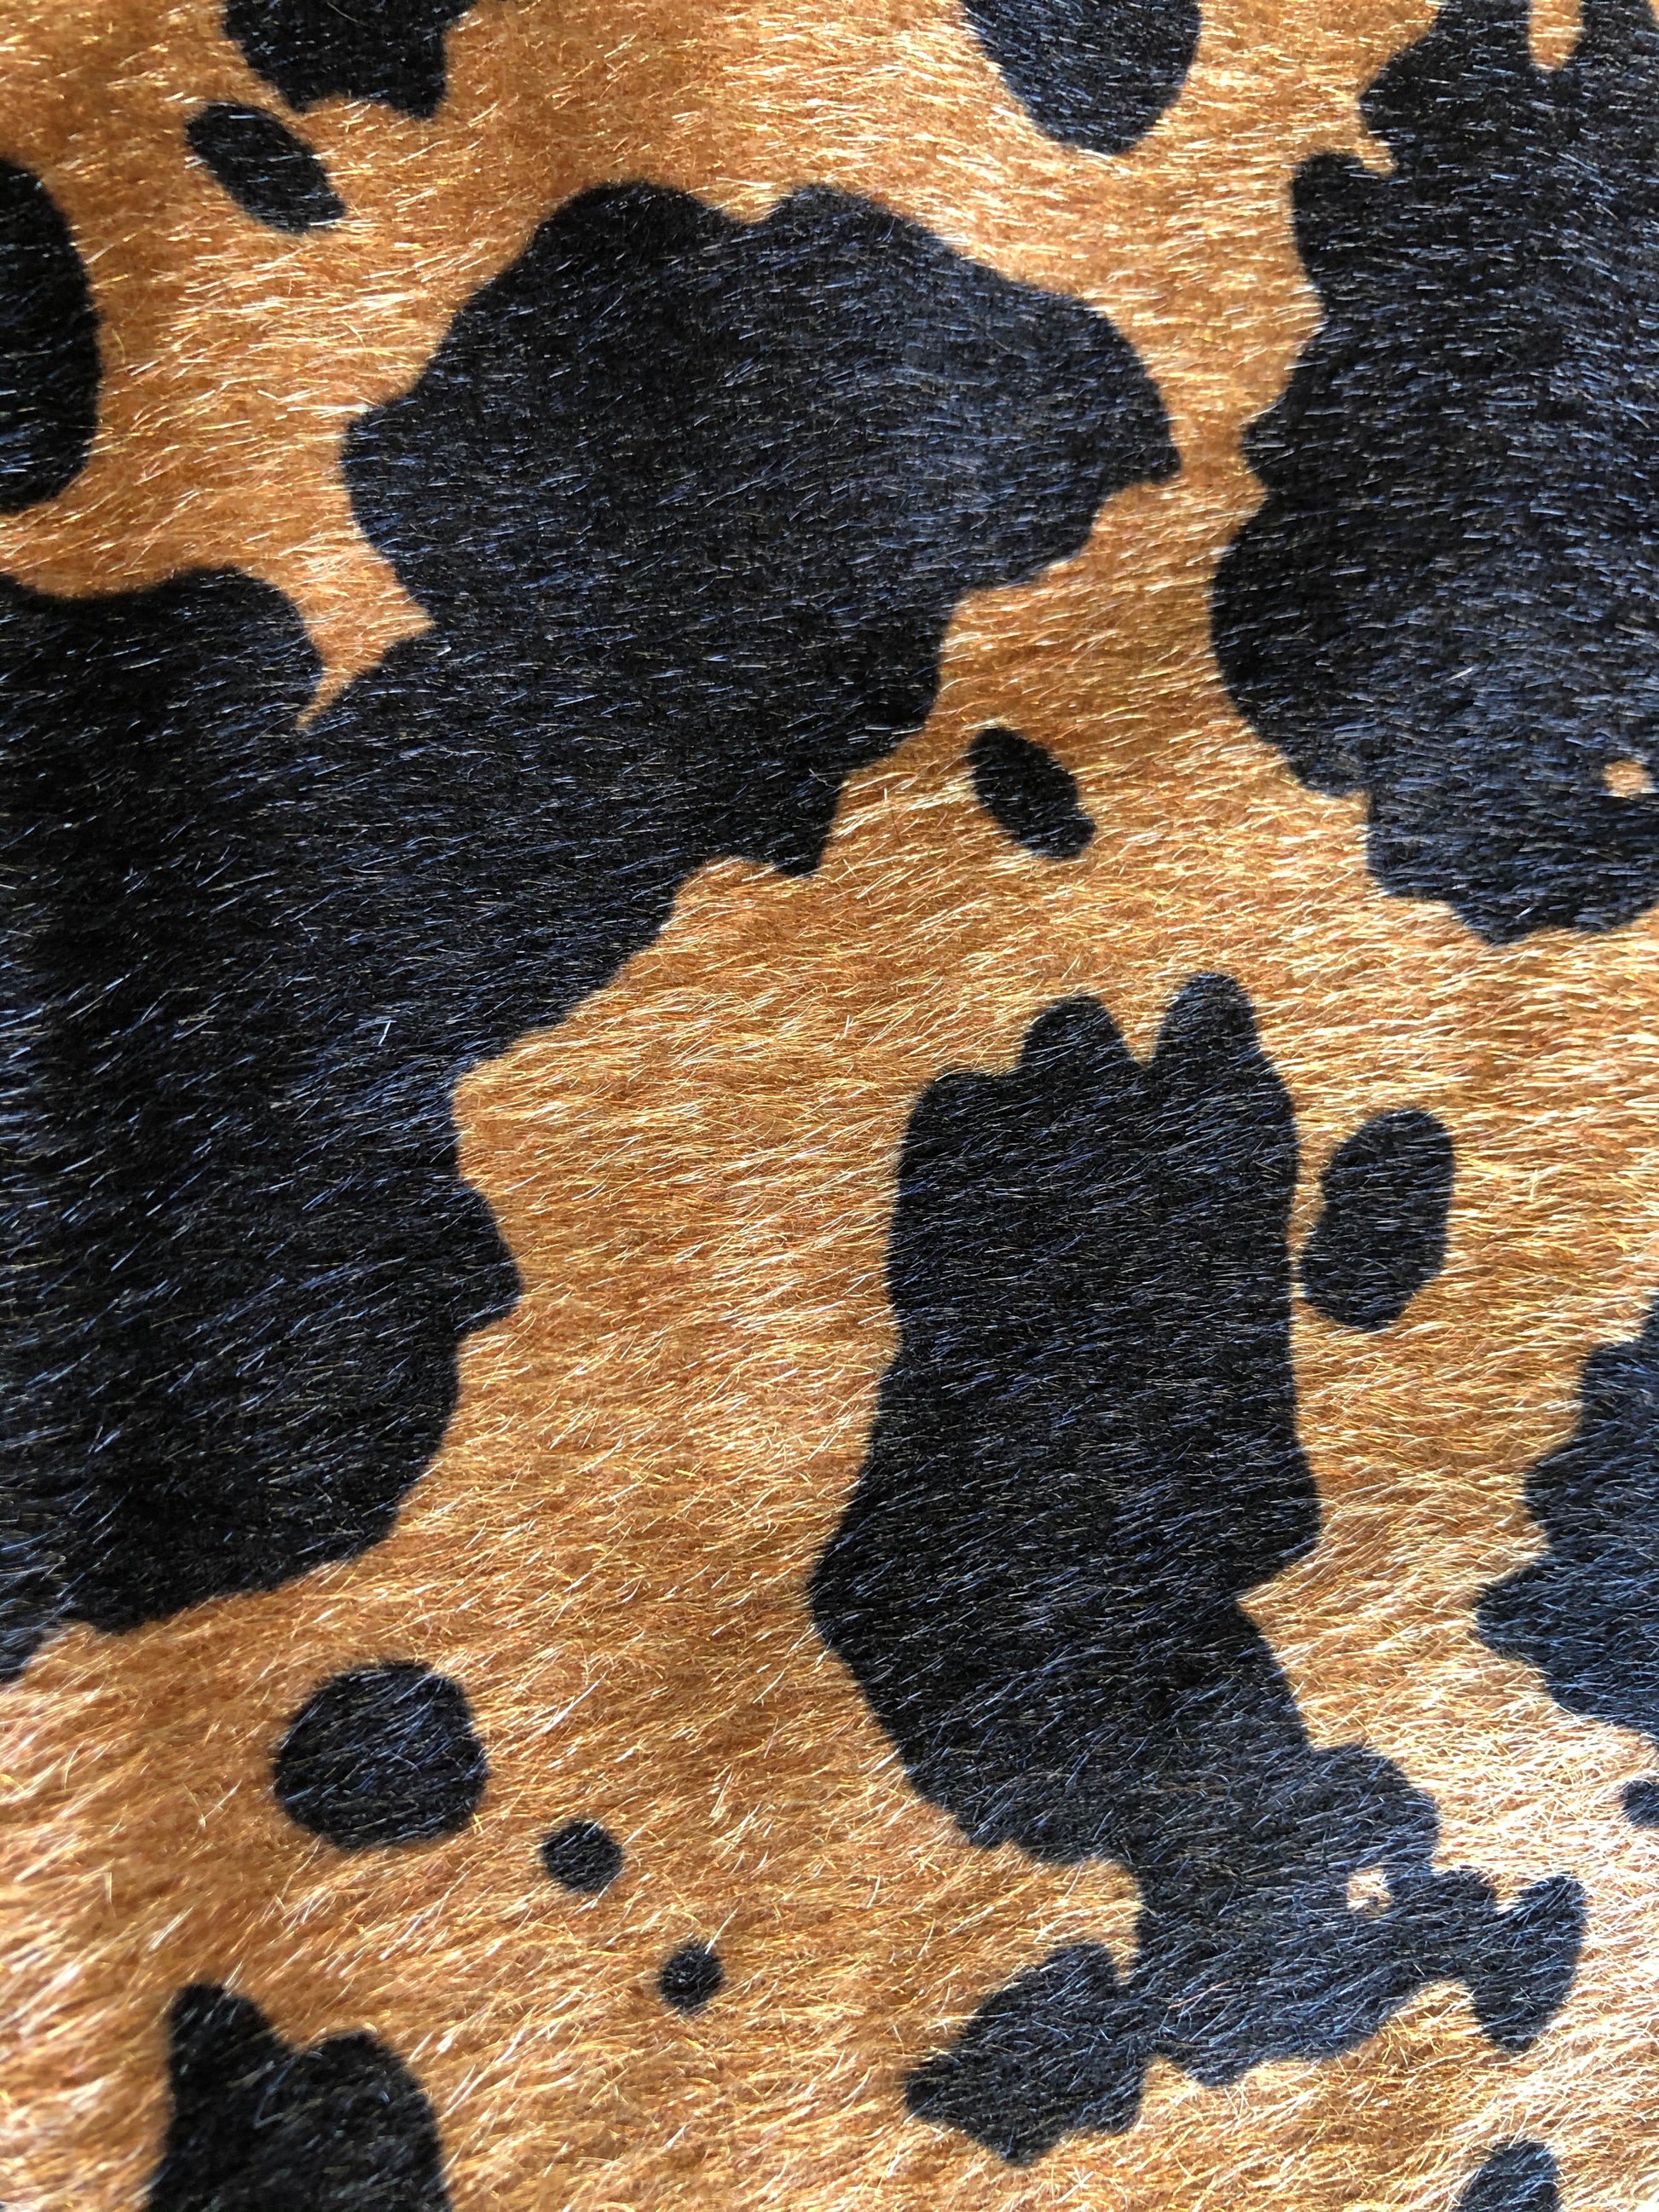 Cowhide Fabric (UTOPIACOWHIDE) - Utopia Animal Print Fabrics